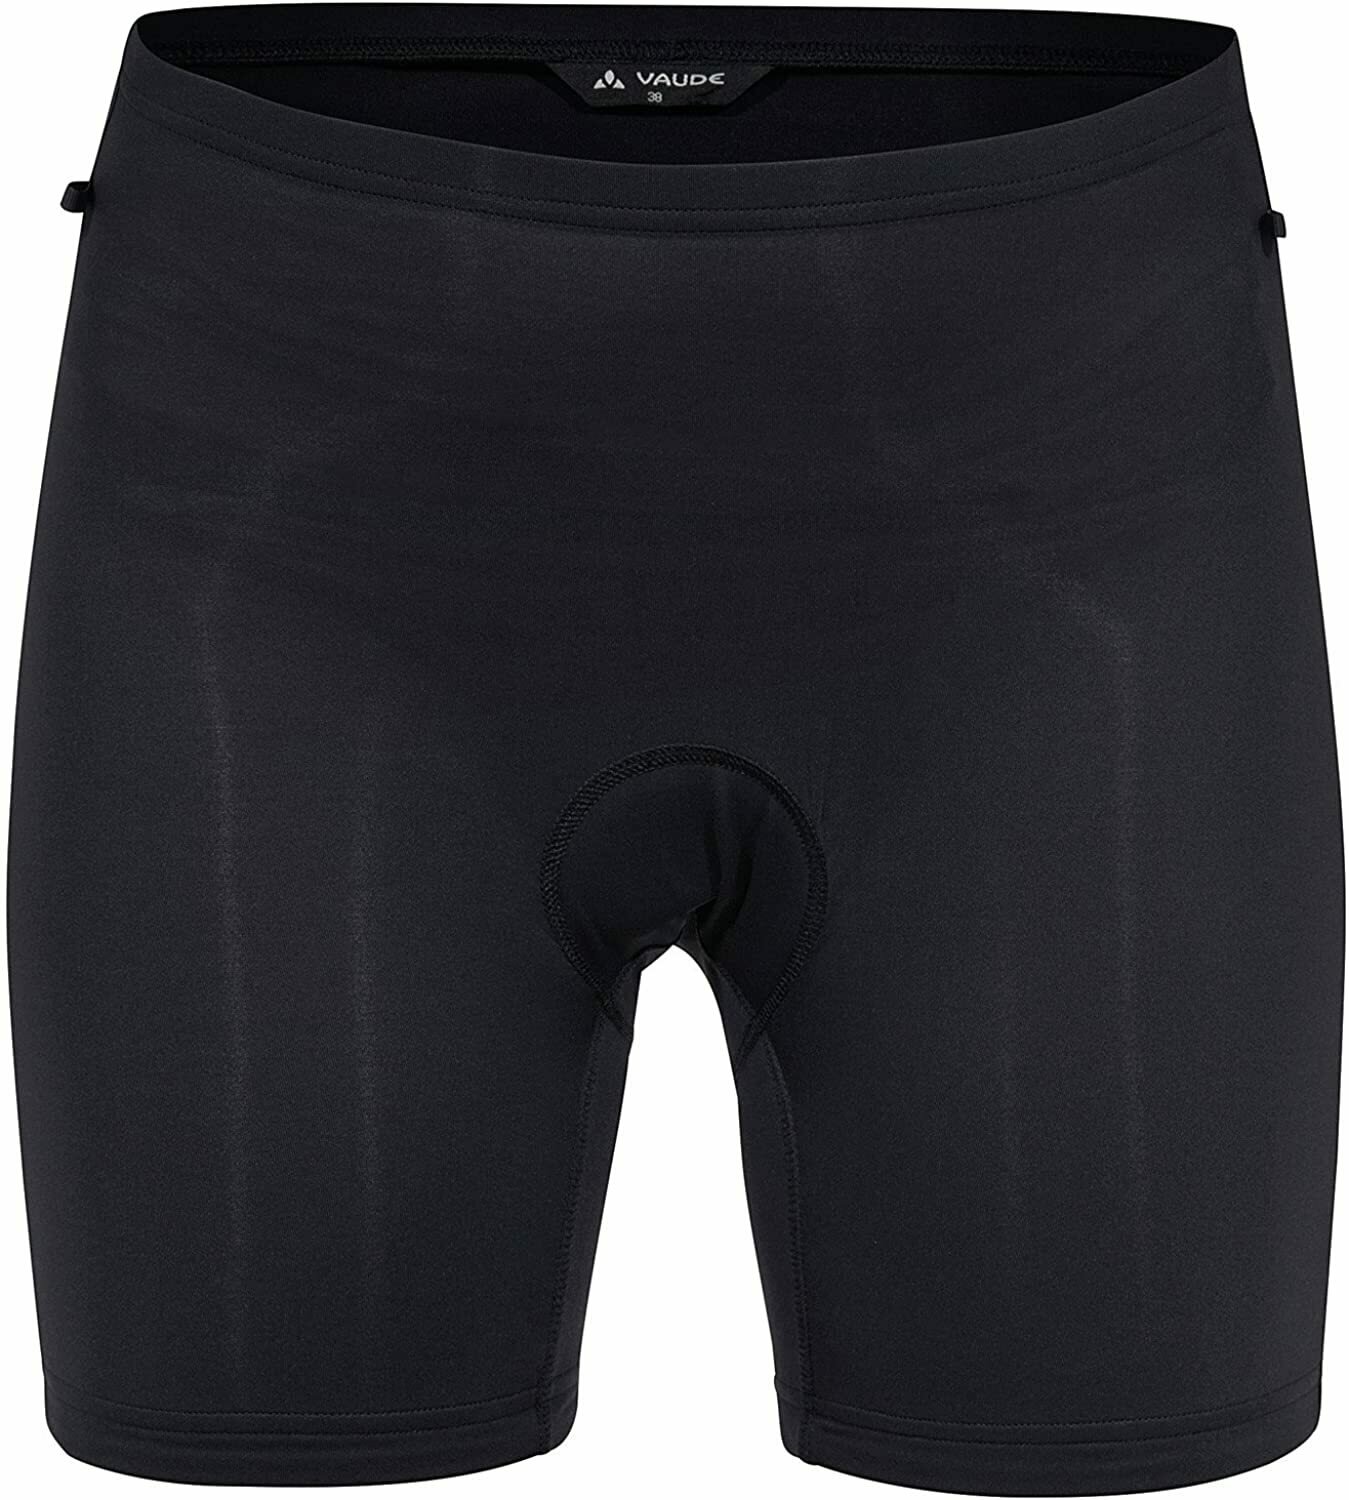 Vaude Bike Innerpants III Damen, Farbe: black, Größe: 36